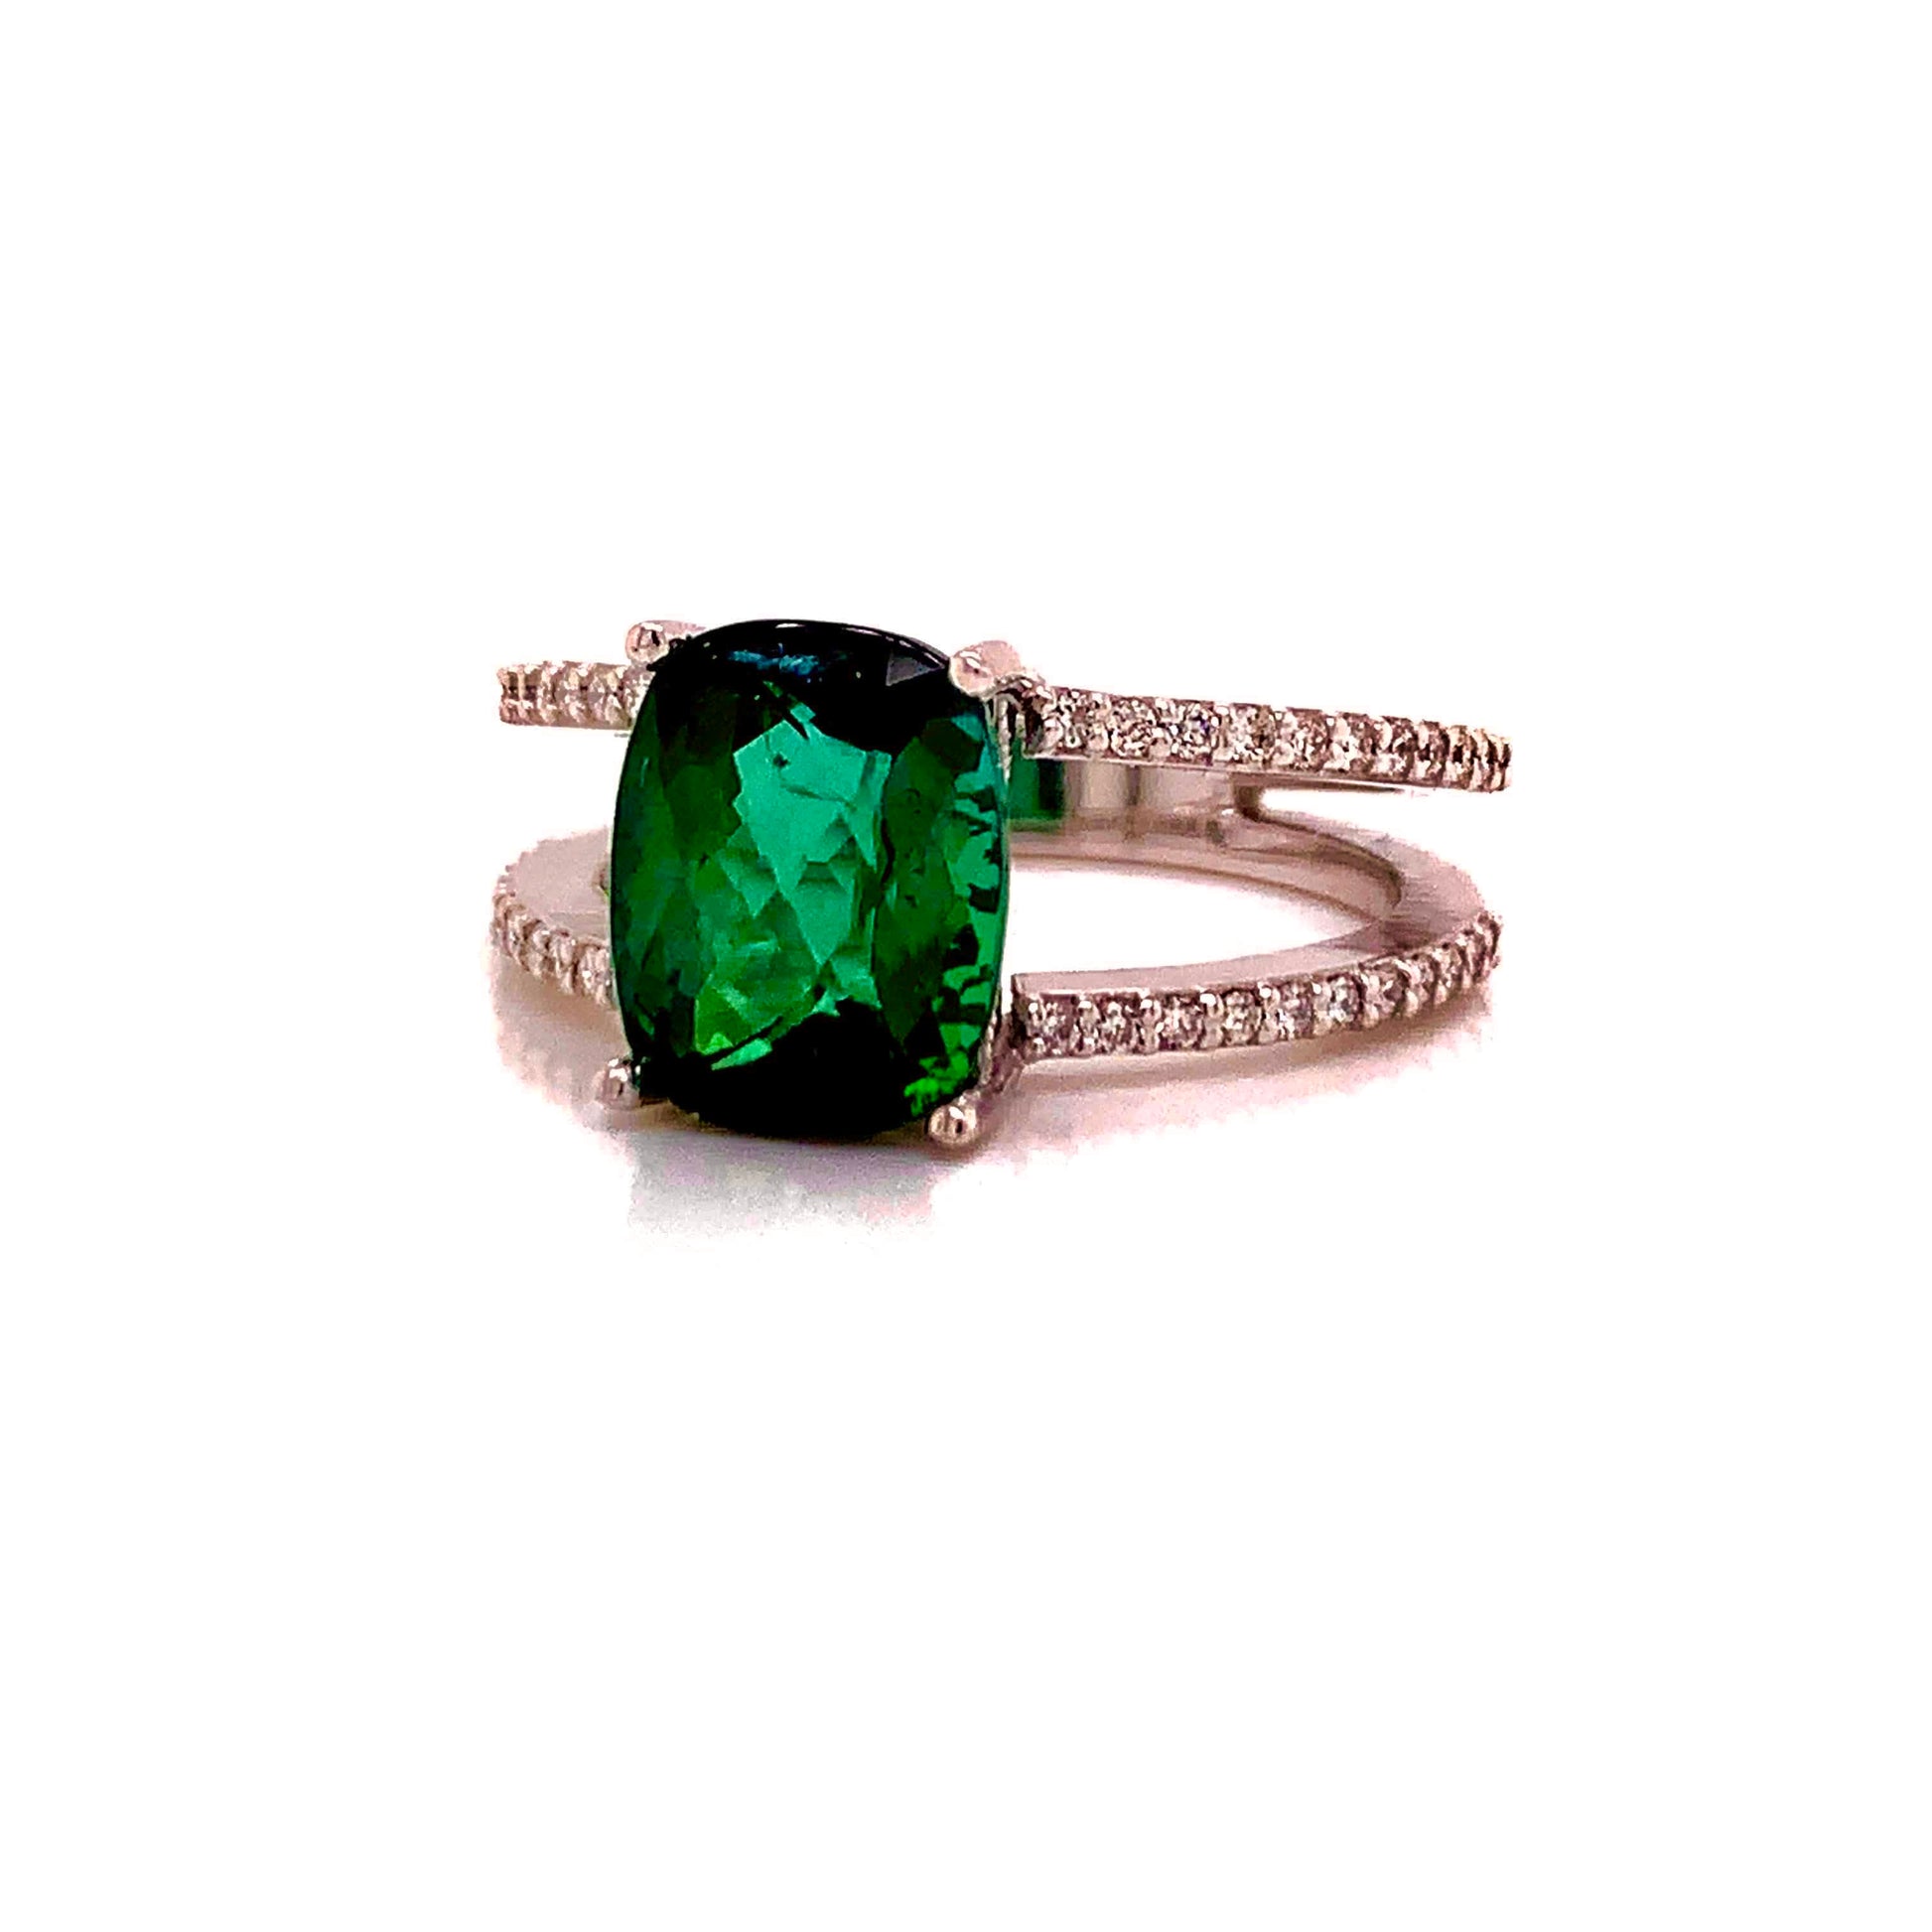 Natural Tourmaline Diamond Ring 14k WG 3.33 TCW Certified $4,950 111876 - Certified Fine Jewelry